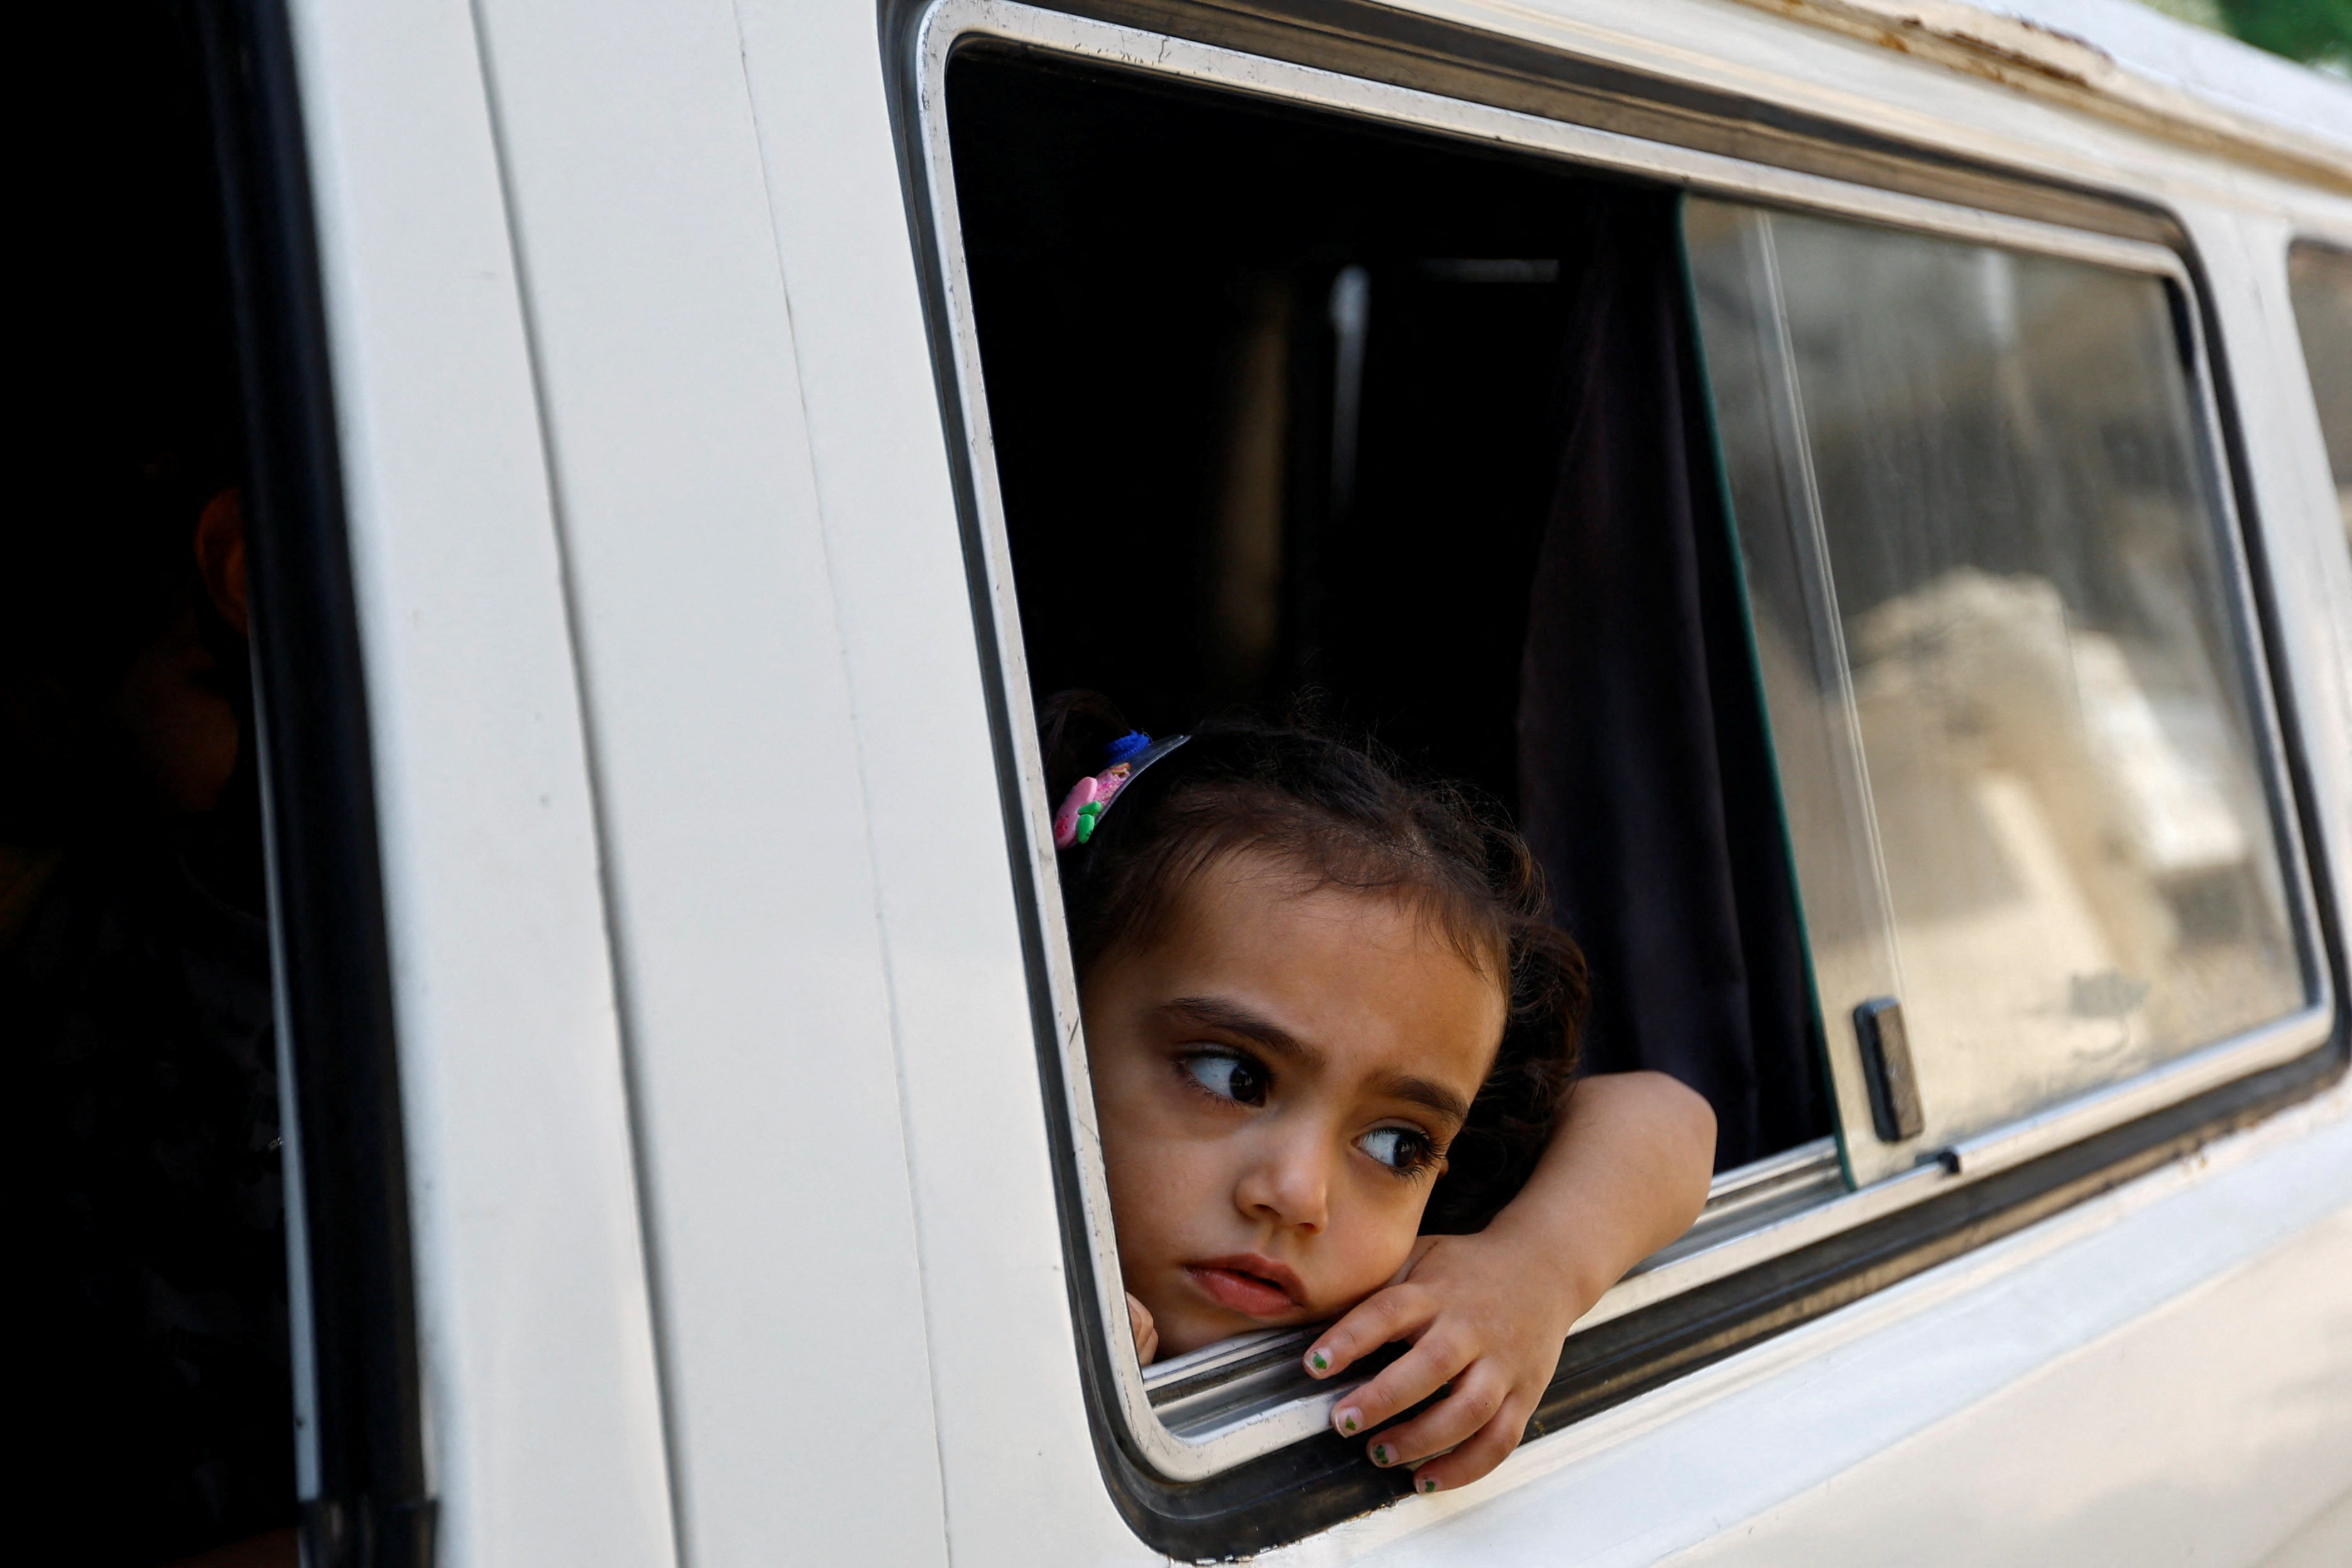 A Palestinian girl looks at a psychiatrist through an open van window in Deir al-Balah